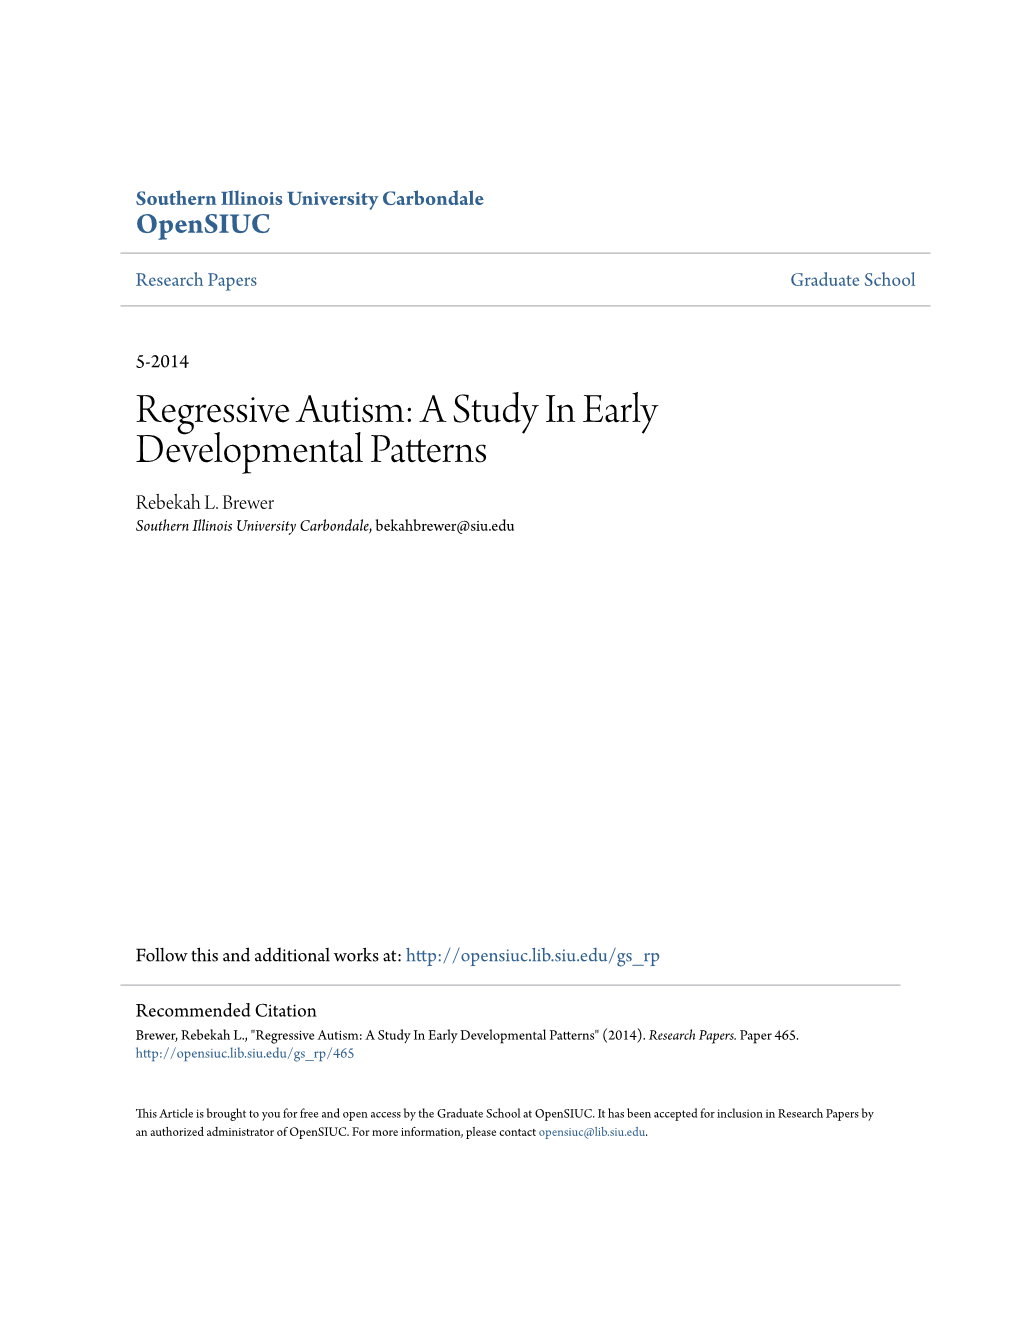 Regressive Autism: a Study in Early Developmental Patterns Rebekah L